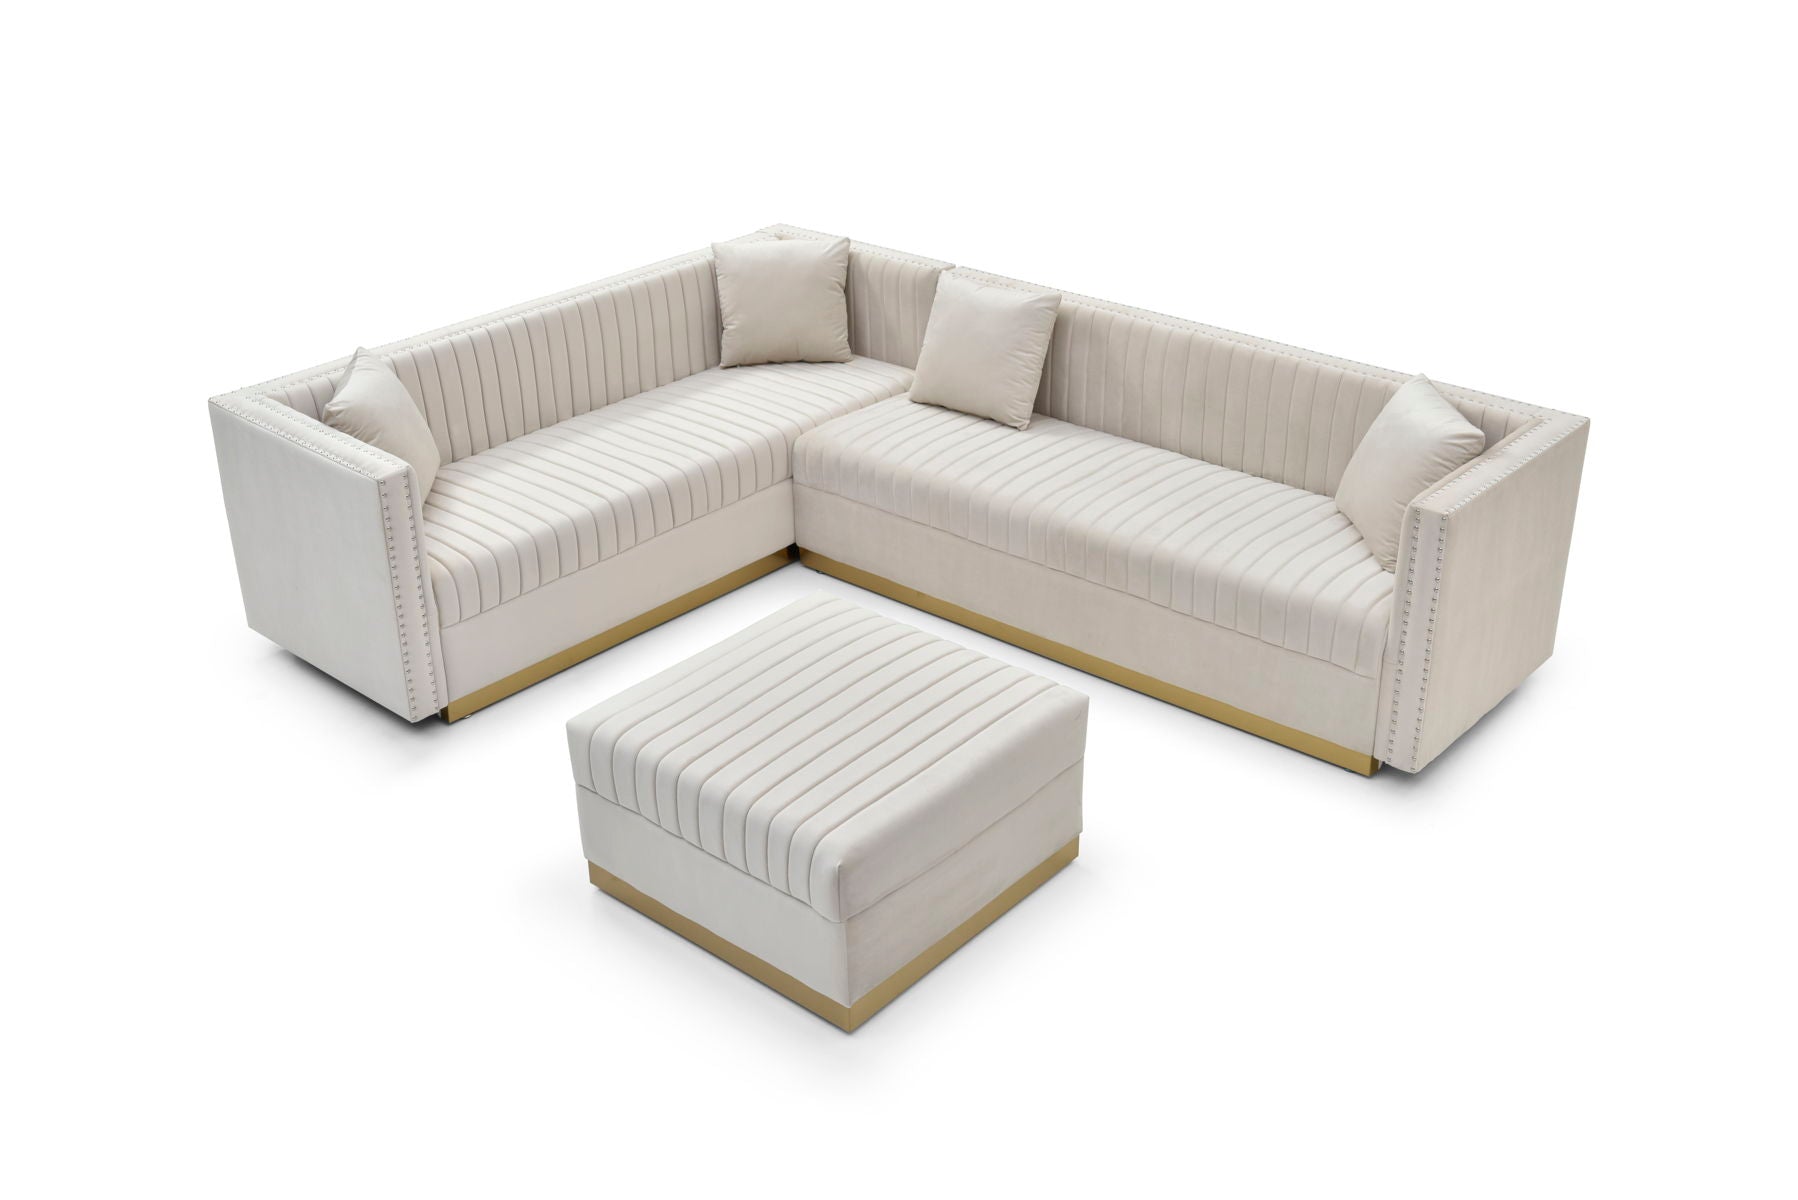 Contemporary Vertical Channel Tufted Velvet Big Size Ottoman Modern Upholstered Foot Rest For Living Room Apartment, Beige